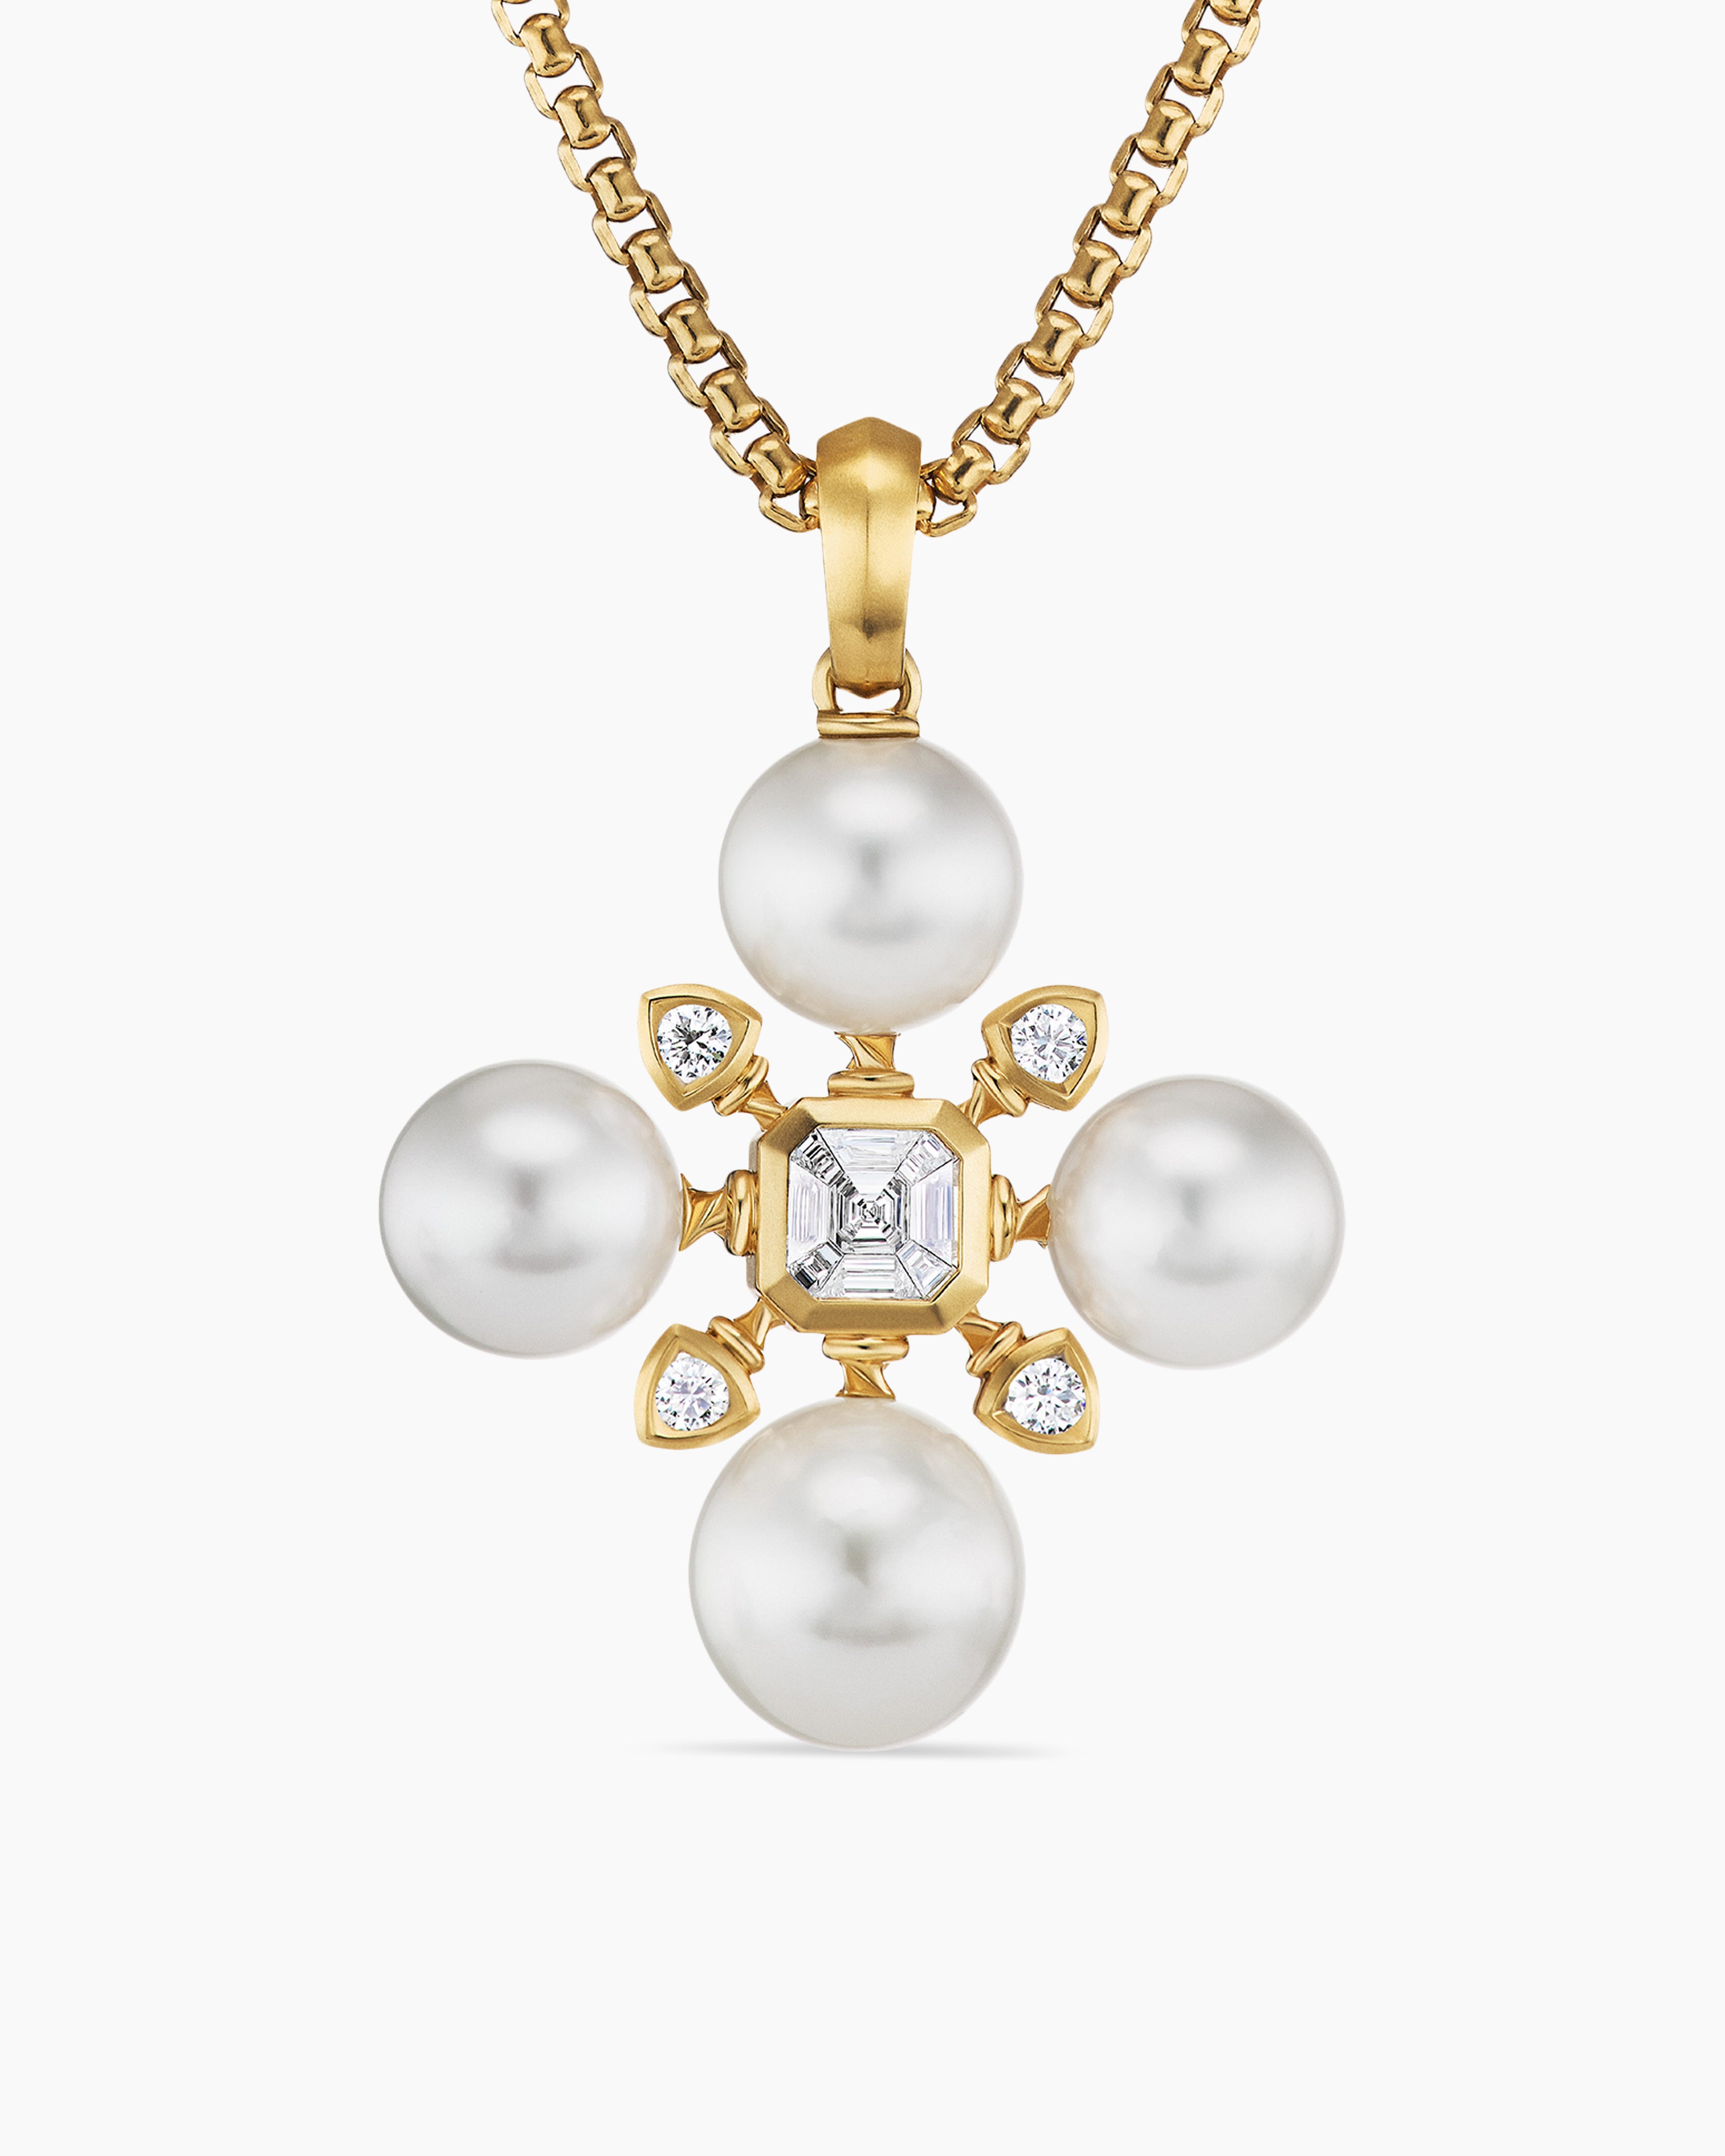 David Yurman Renaissance Pearl Pendant with 18K Yellow Gold and Diamonds